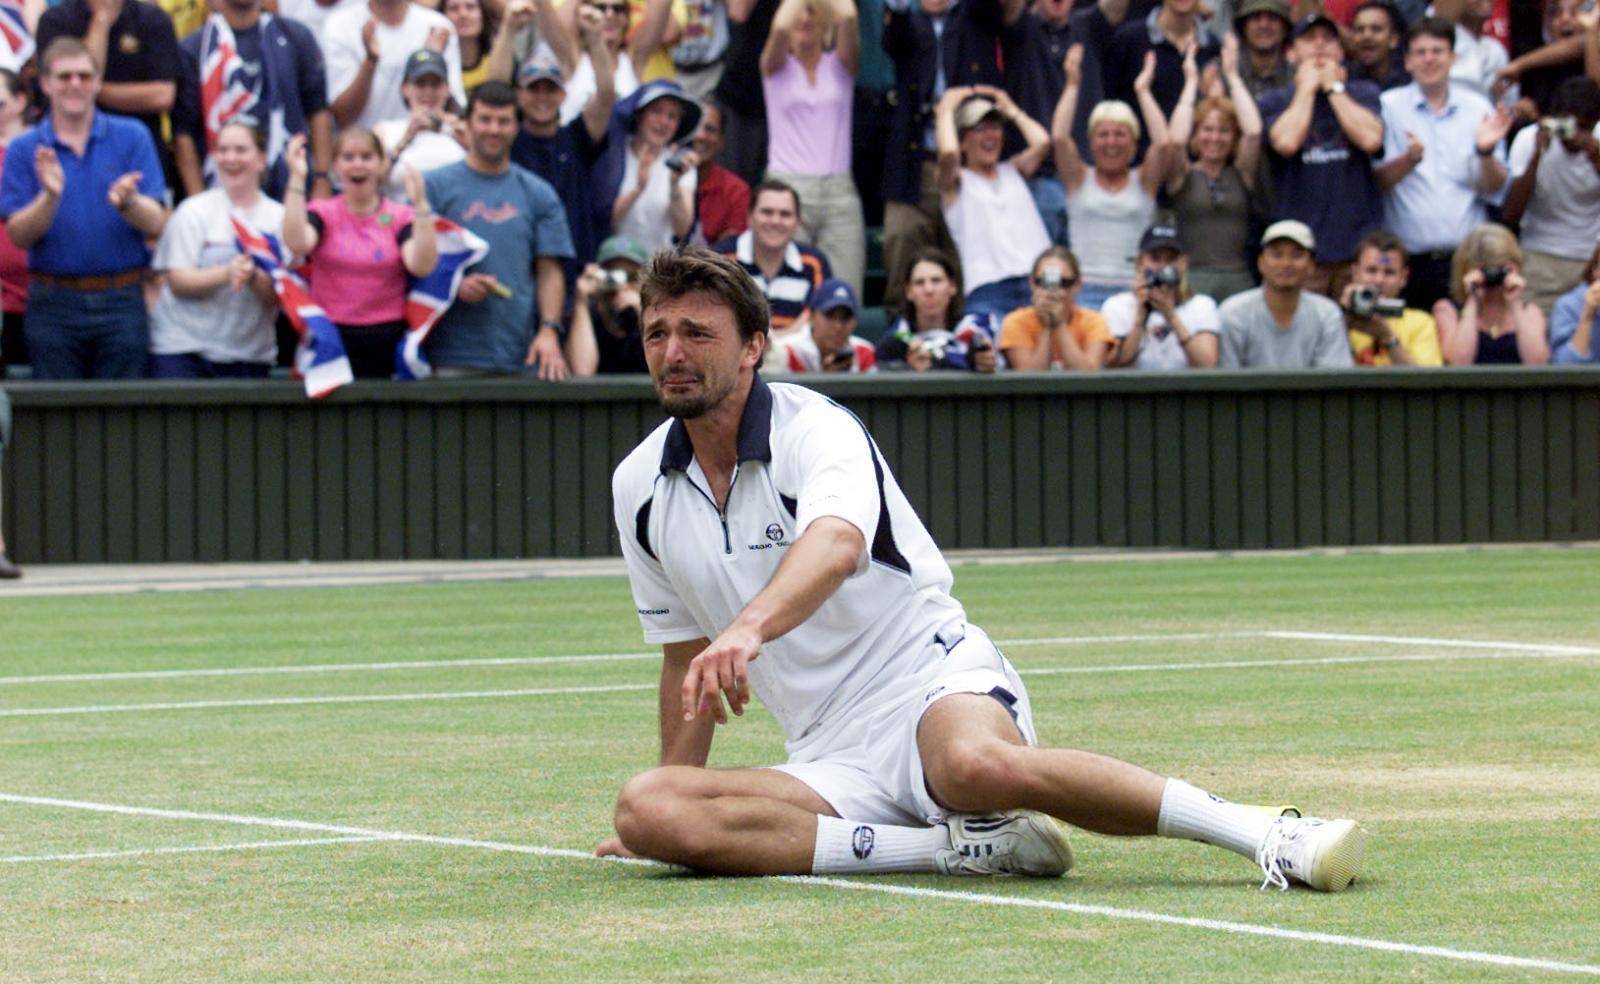 Wimbledon Ivanisevic v Rafter